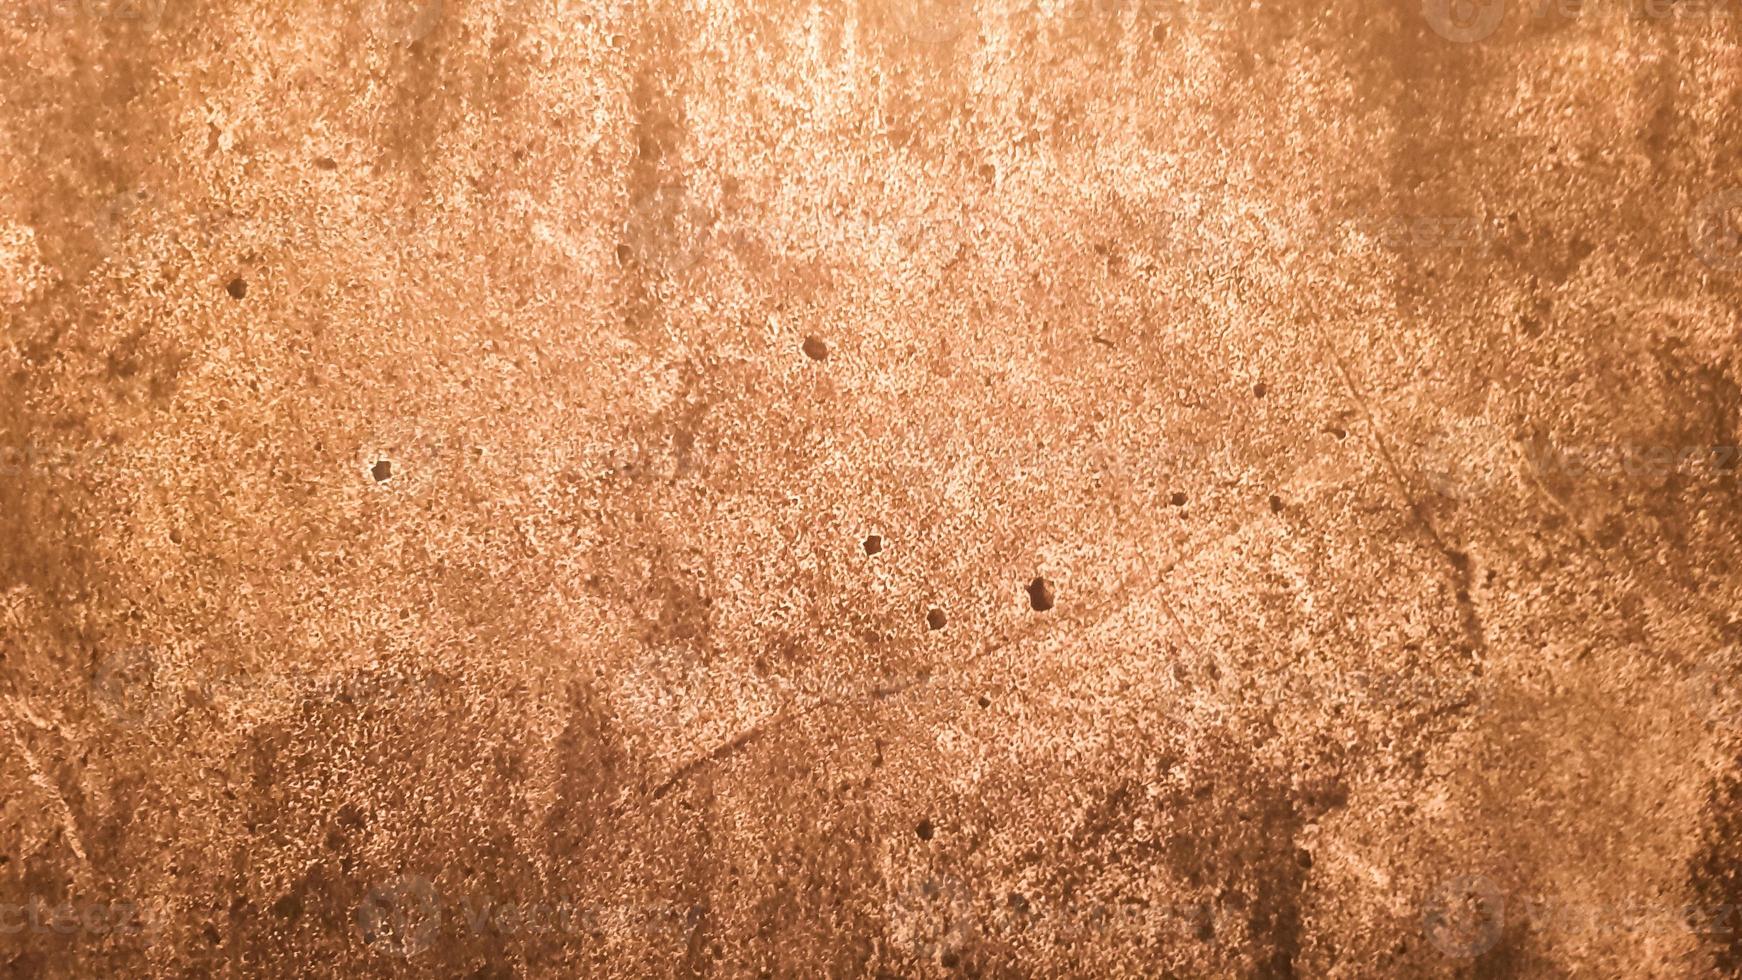 granieten steen textuur. bruin gouden stenen achtergrond. oude lege stenen muur oppervlak of oude vuile bruine papieren textuur achtergrond bruin of beige. bruin goud grunge. foto